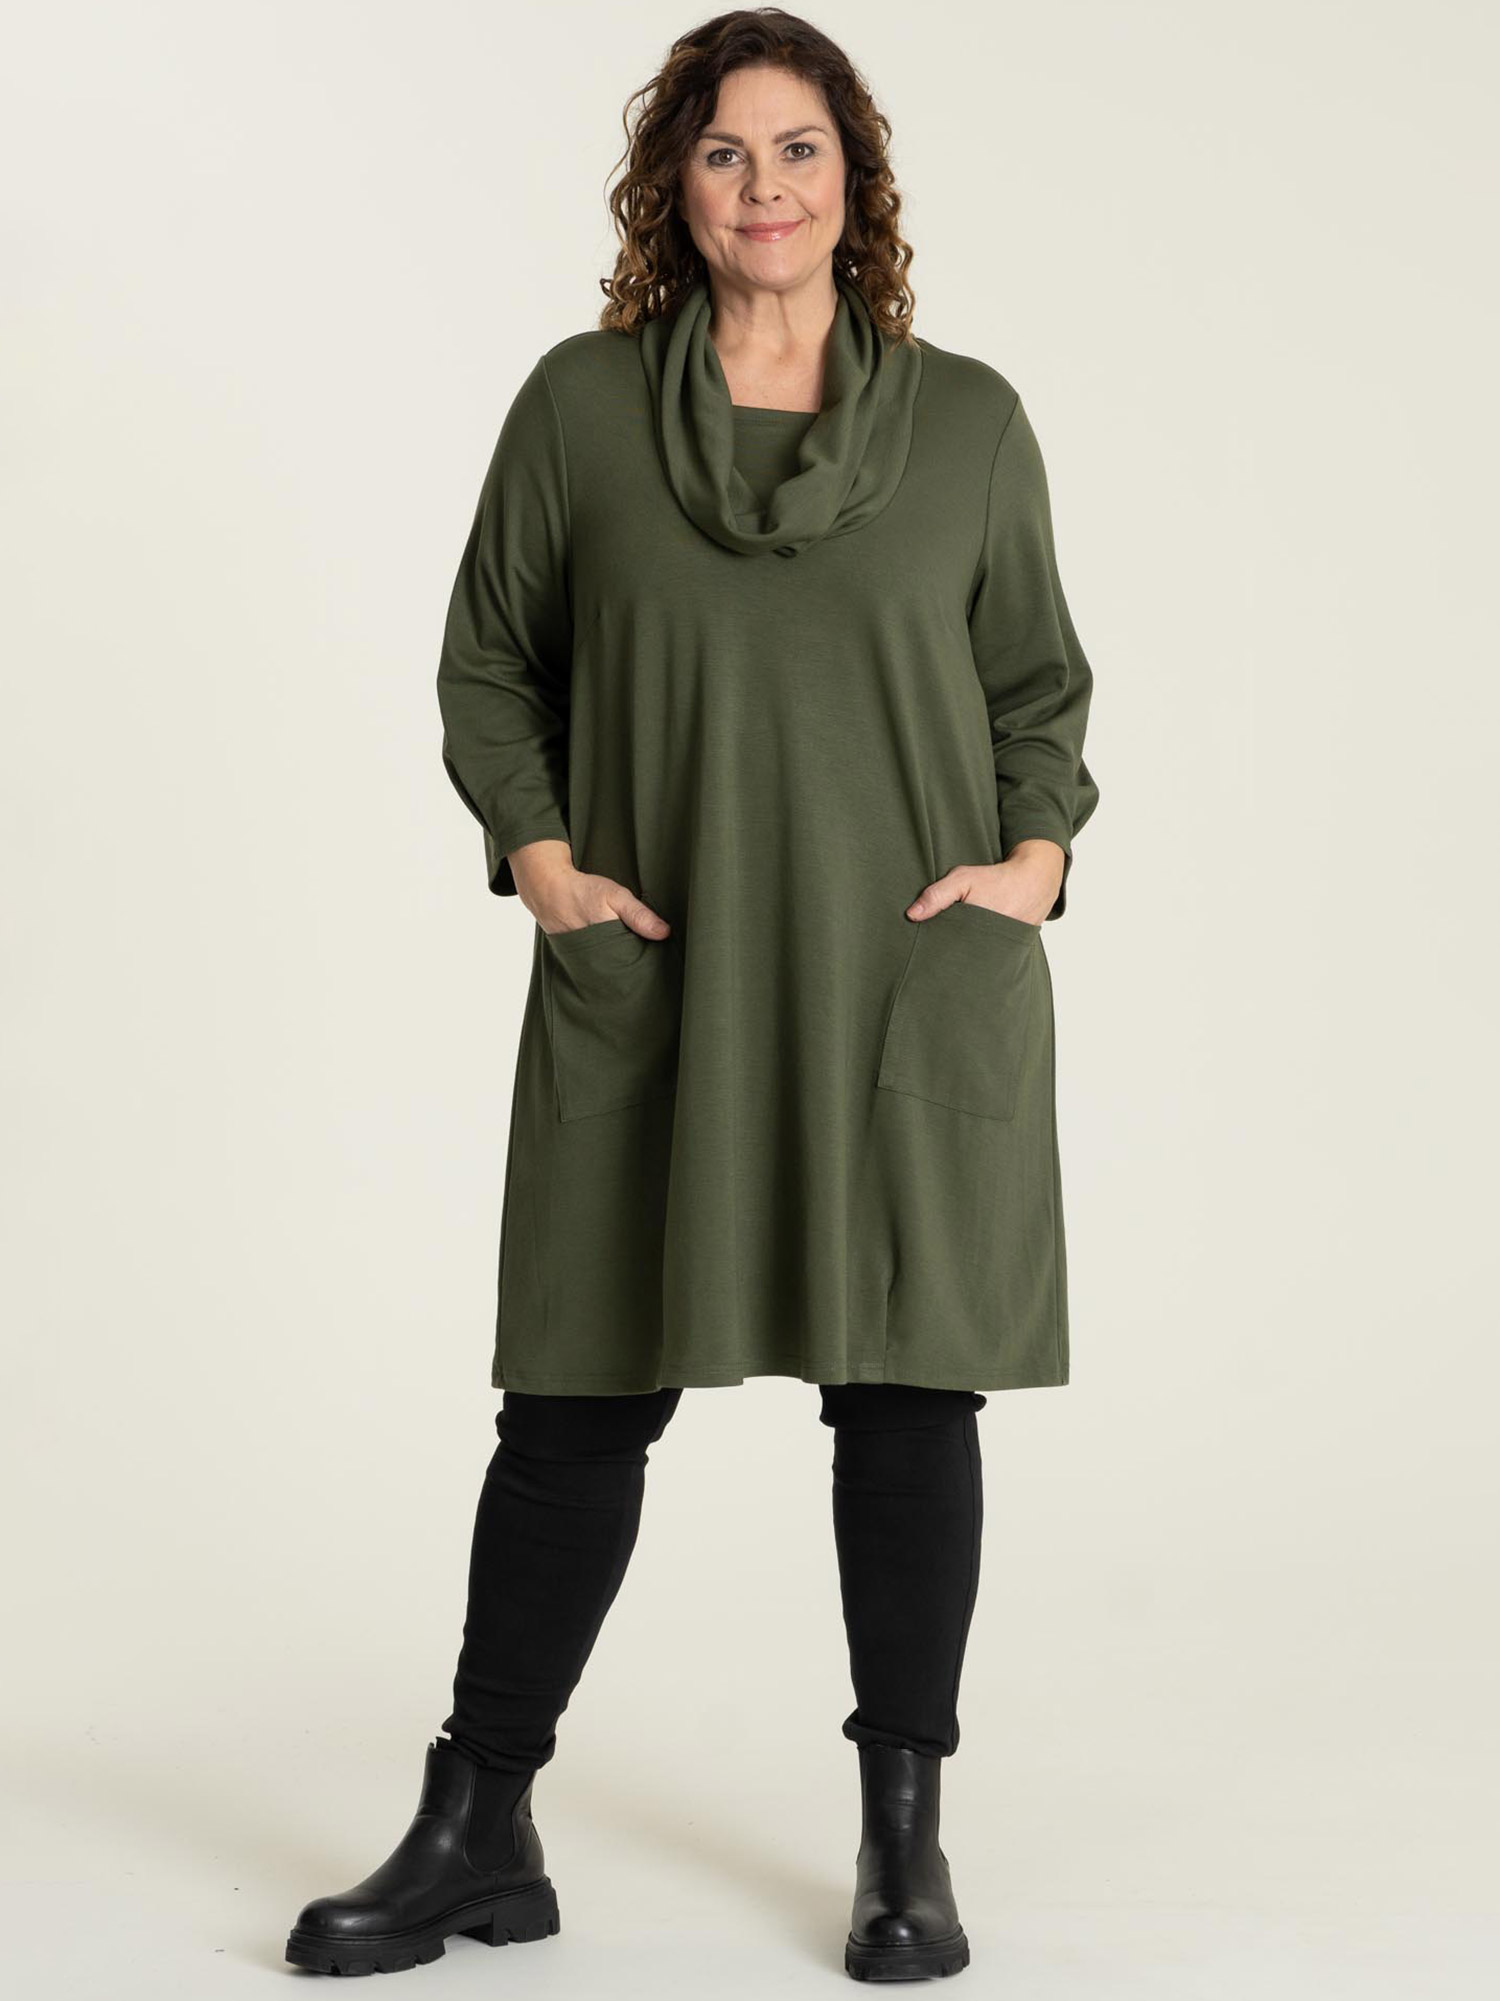 NIKOLINE - olivgrön tunika med fickor fra Gozzip